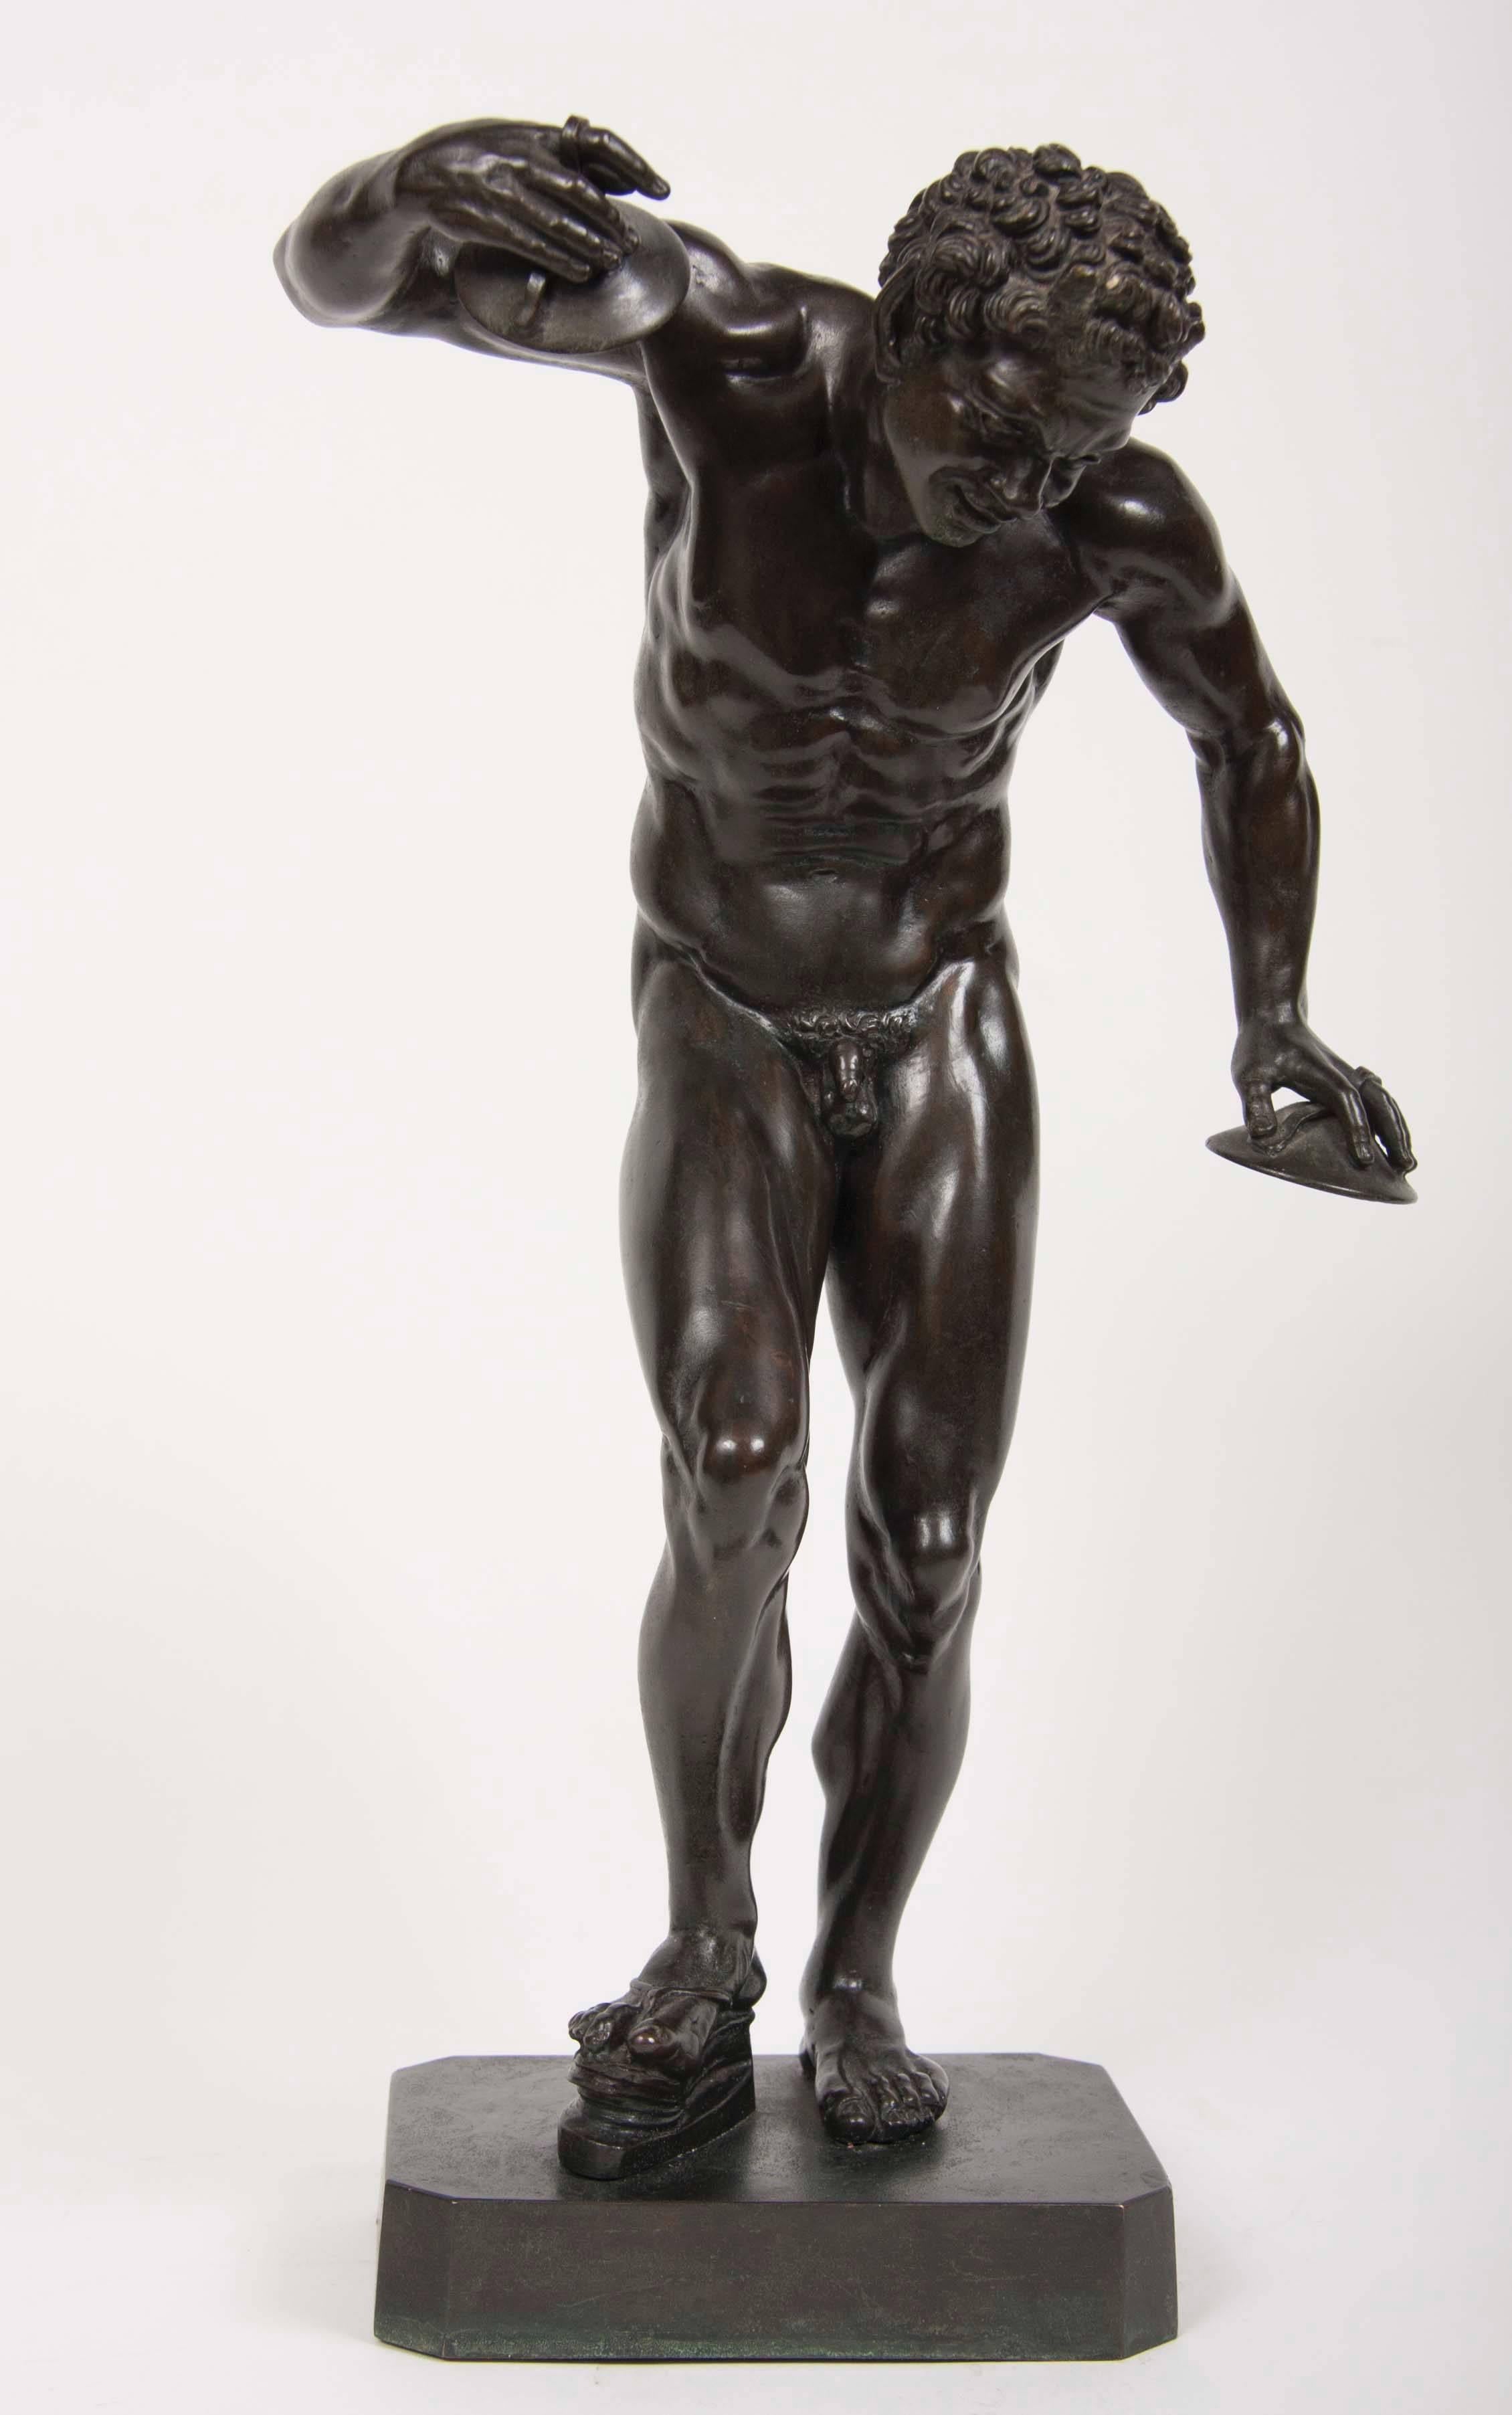 A Grand Tour patinated bronze figure of a dancing faun by Massimiliano Soldani Benzi.